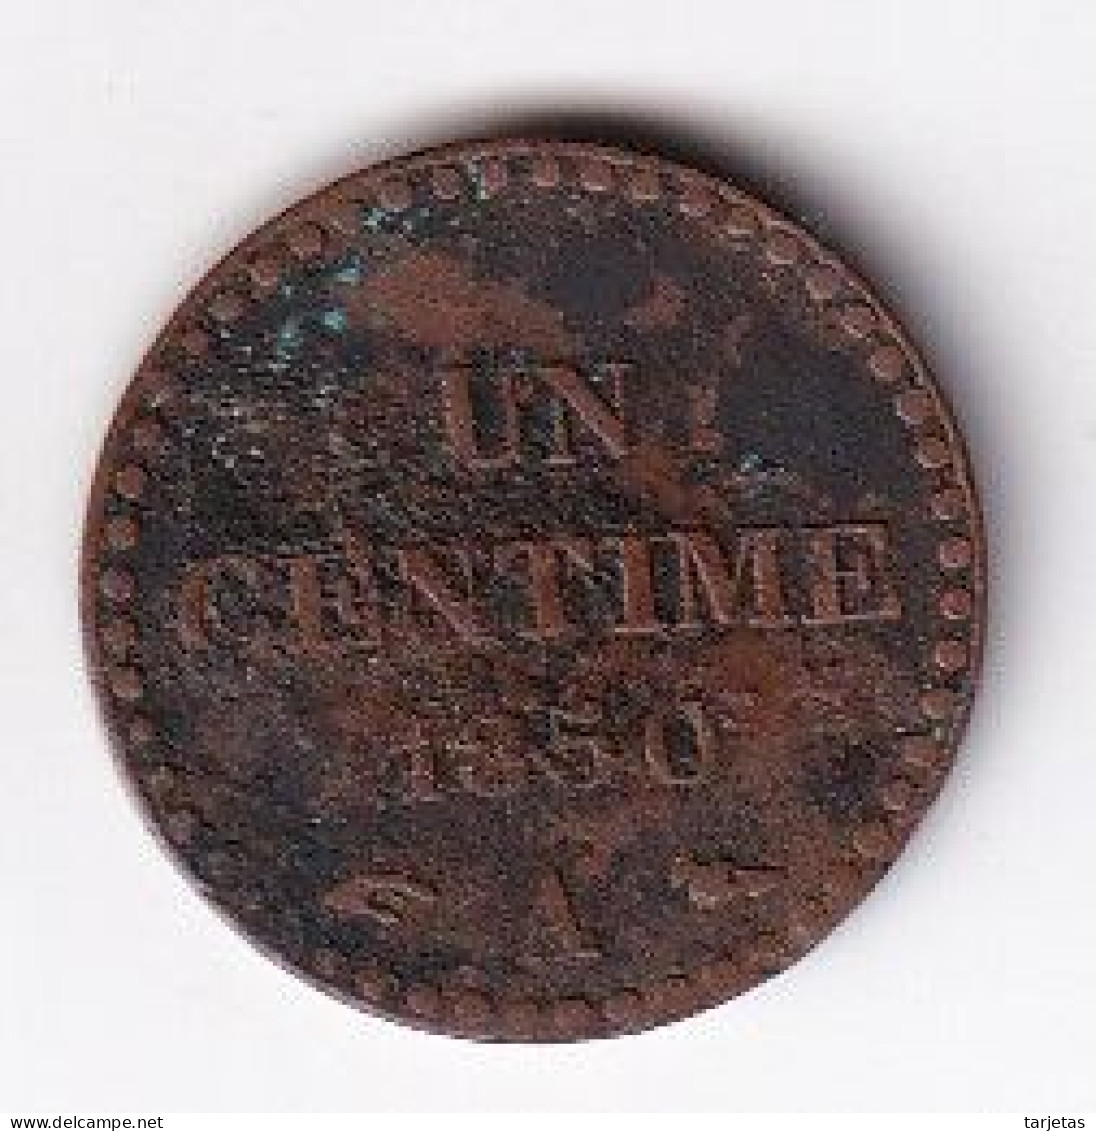 MONEDA DE FRANCIA DE 1 CENTIME DEL AÑO 1850 (COIN) - 1 Centime